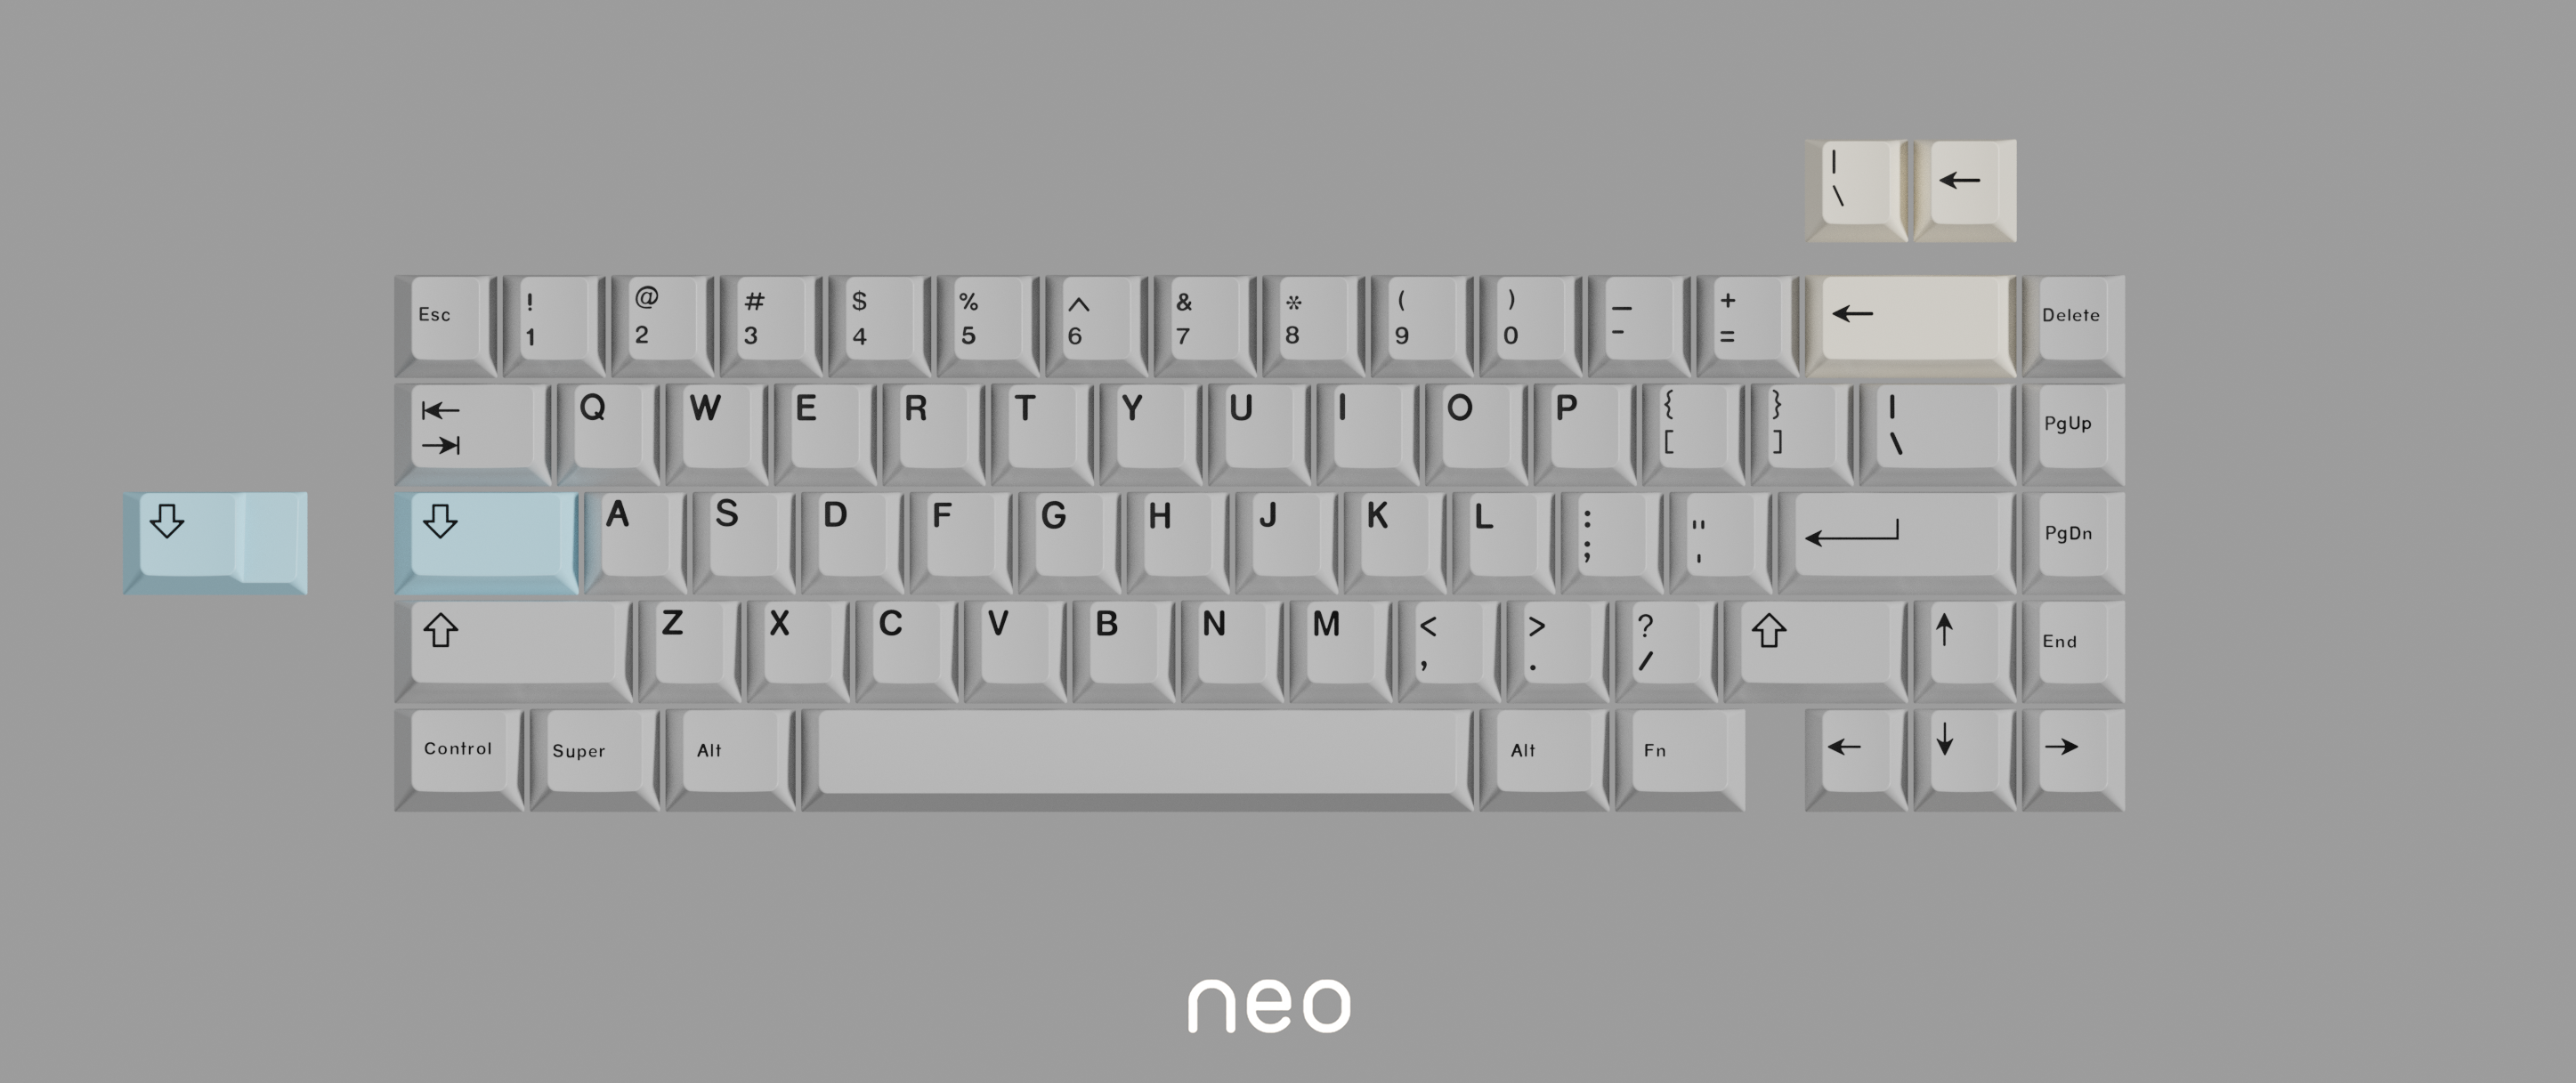 [Instock] Neo65 Addons